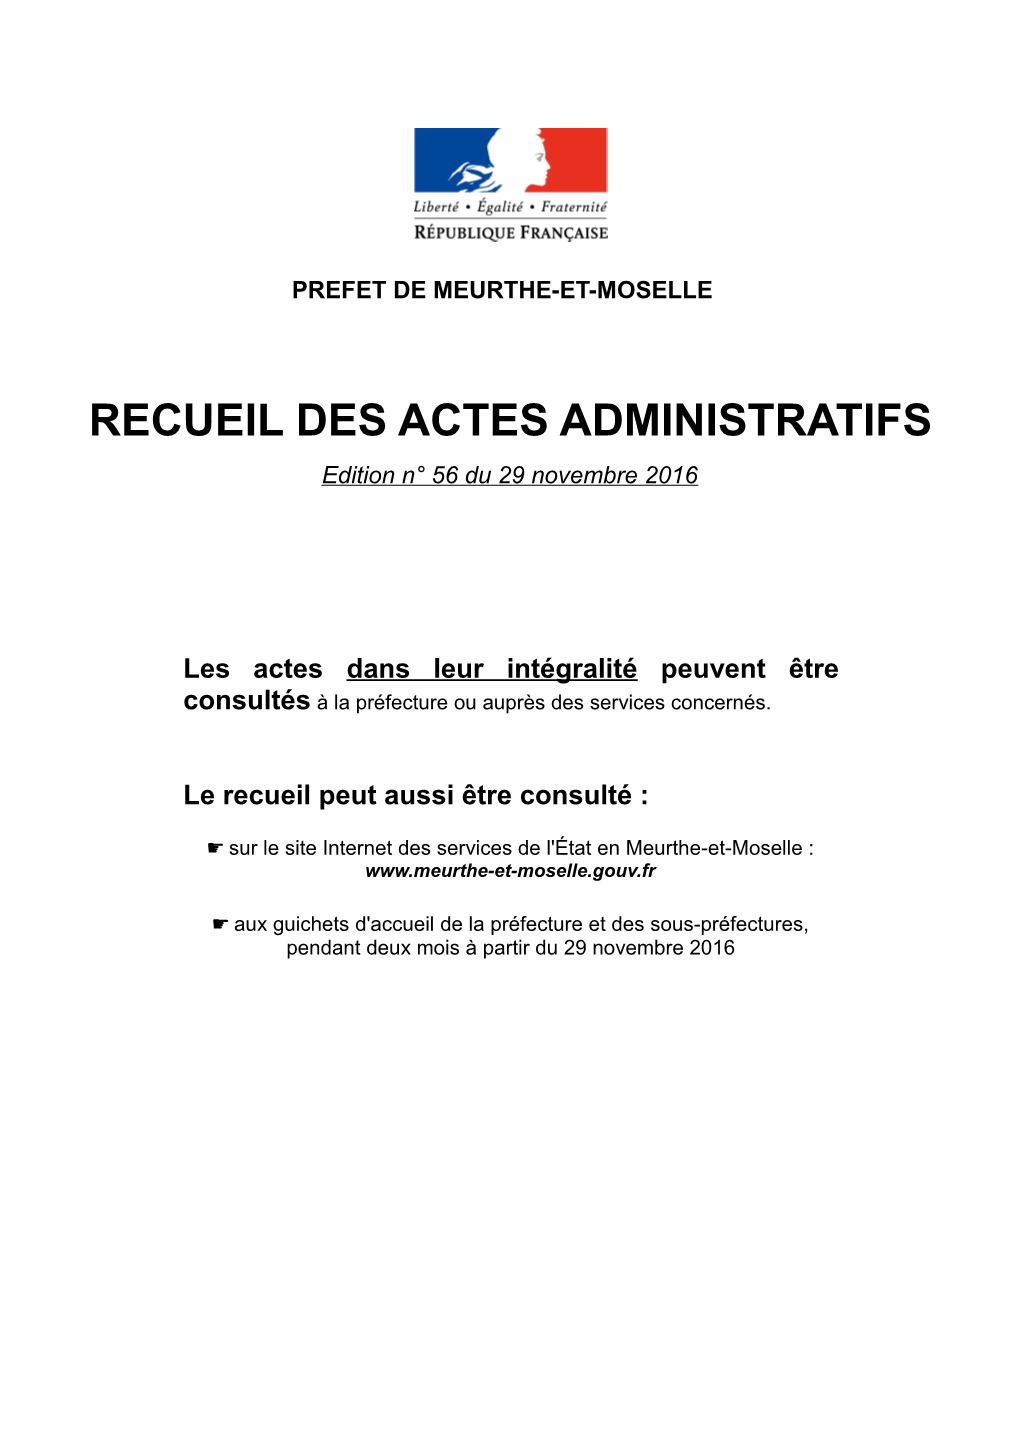 RECUEIL DES ACTES ADMINISTRATIFS Edition N° 56 Du 29 Novembre 2016